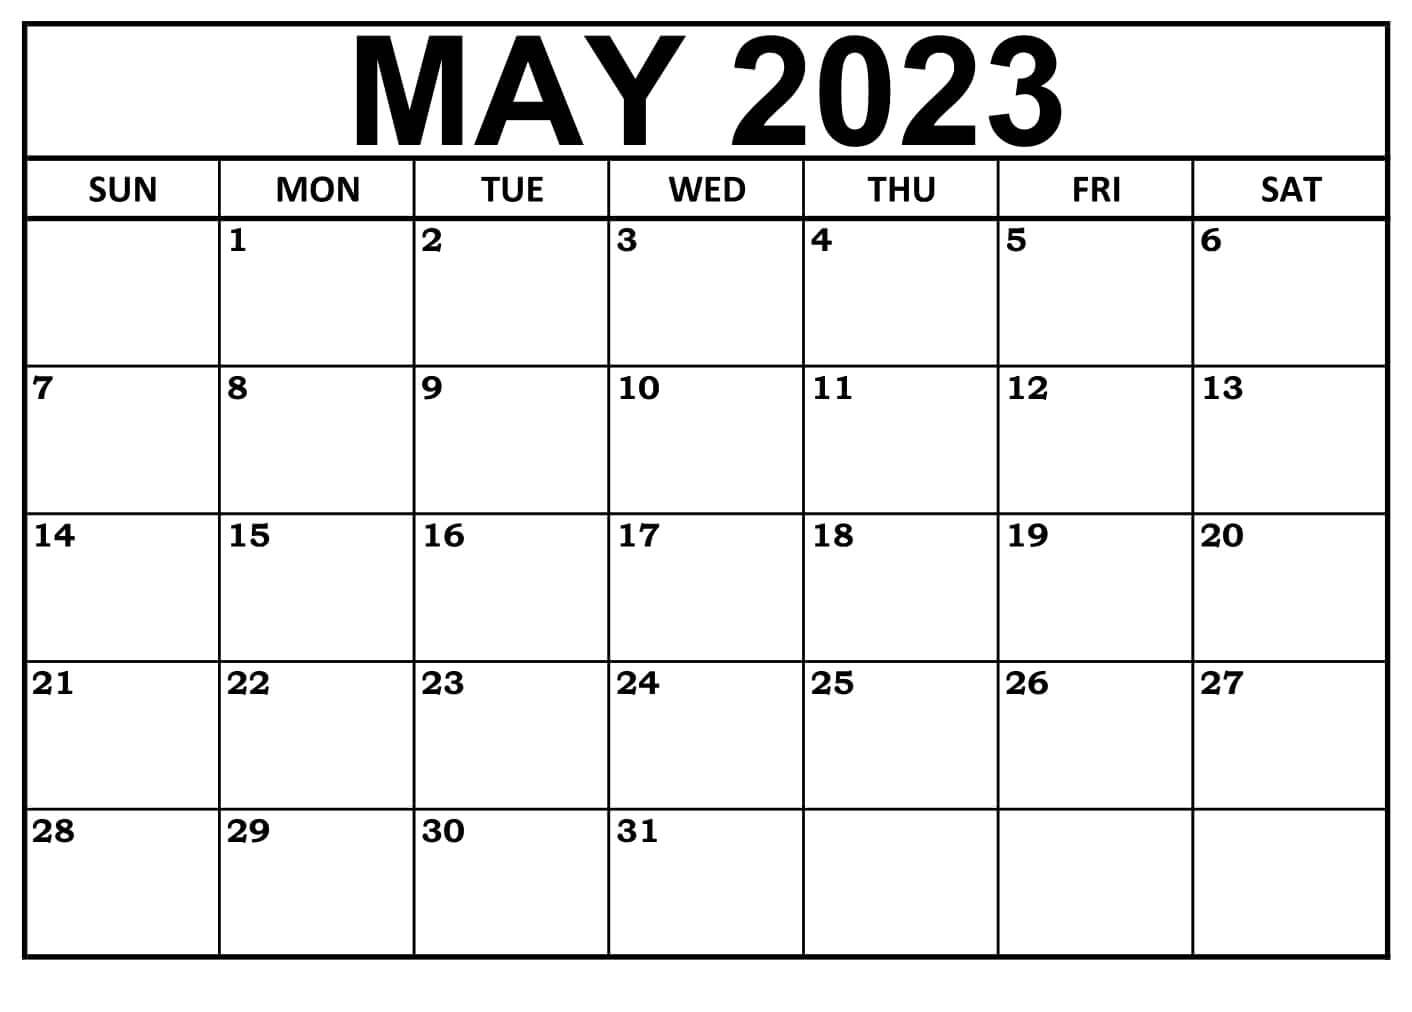 May 2023 Calendar PDF